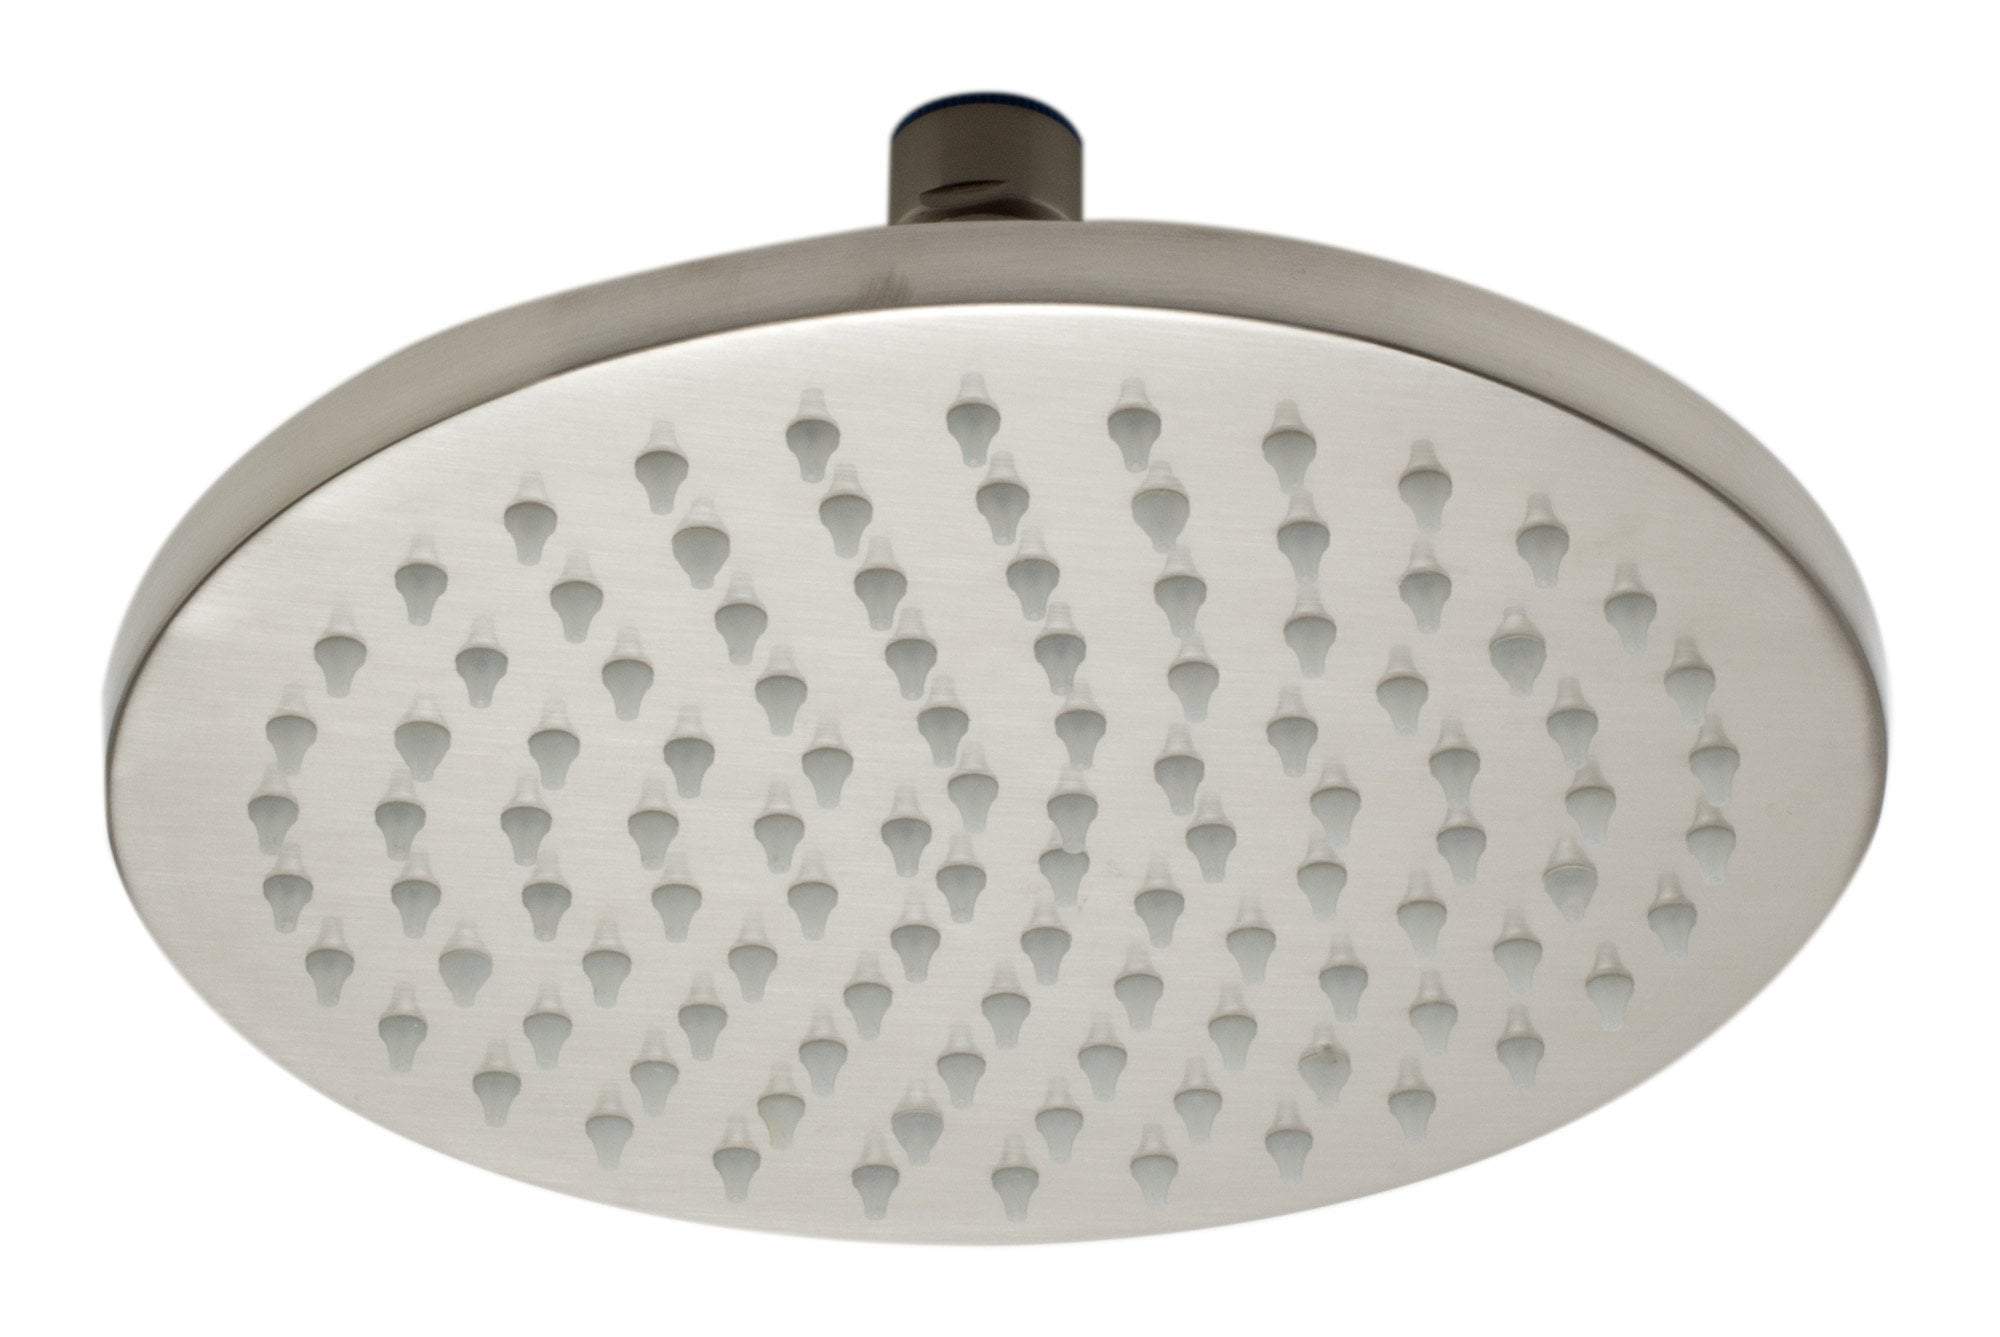 ALFI brand LED8R-BN Brushed Nickel 8" Round Multi Color LED Rain Shower Head